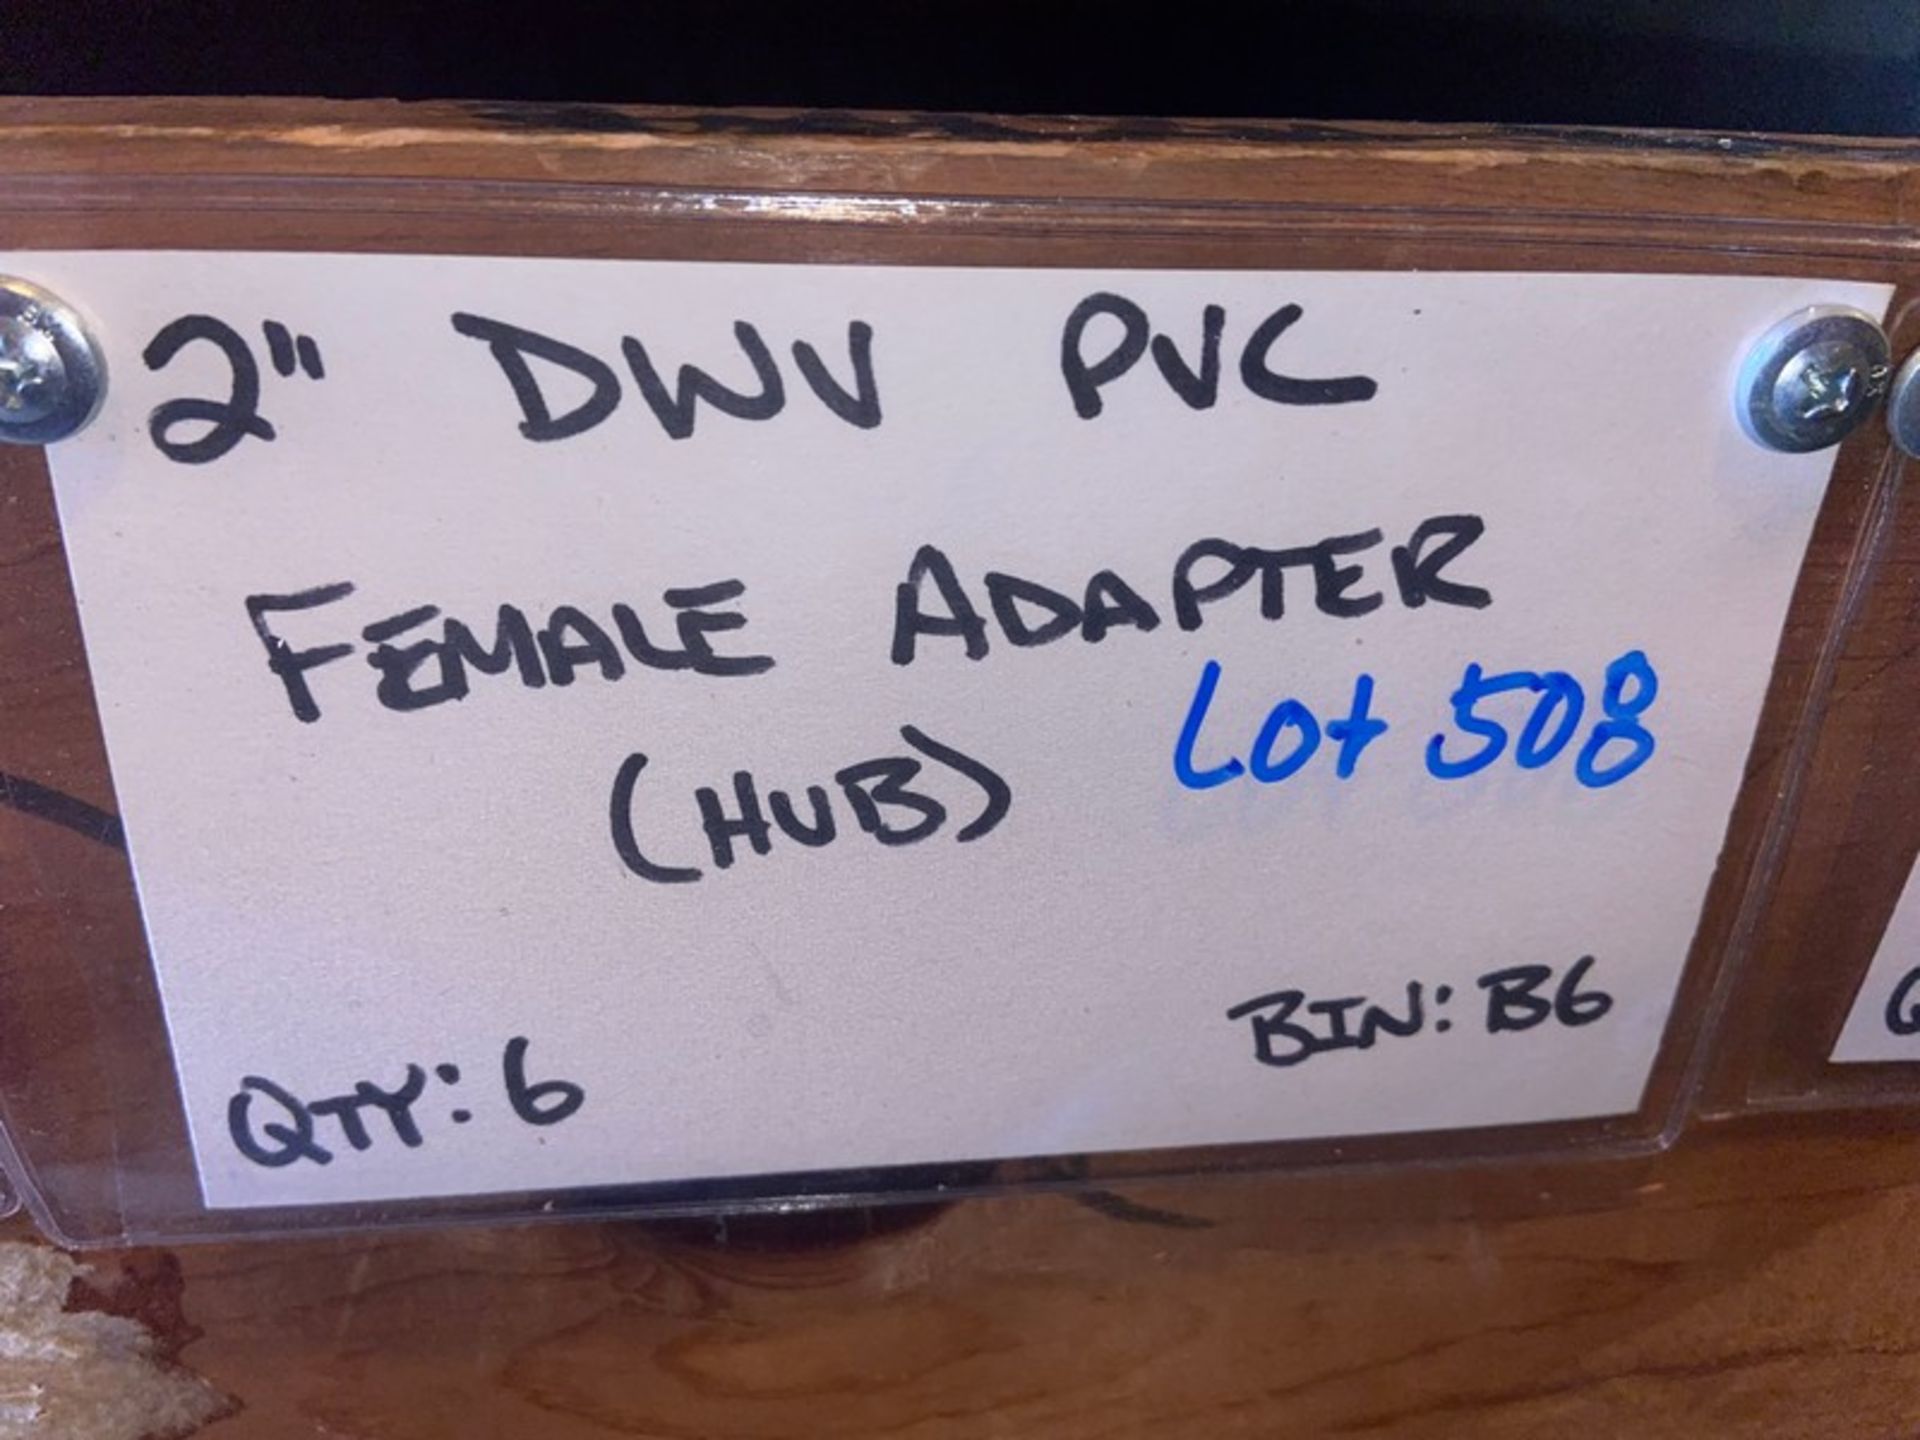 (6) 2” DWV PVC Female Adapter (HUB) (Bin:B6) (Trailer #5)(LOCATED IN MONROEVILLE, PA) - Image 3 of 7